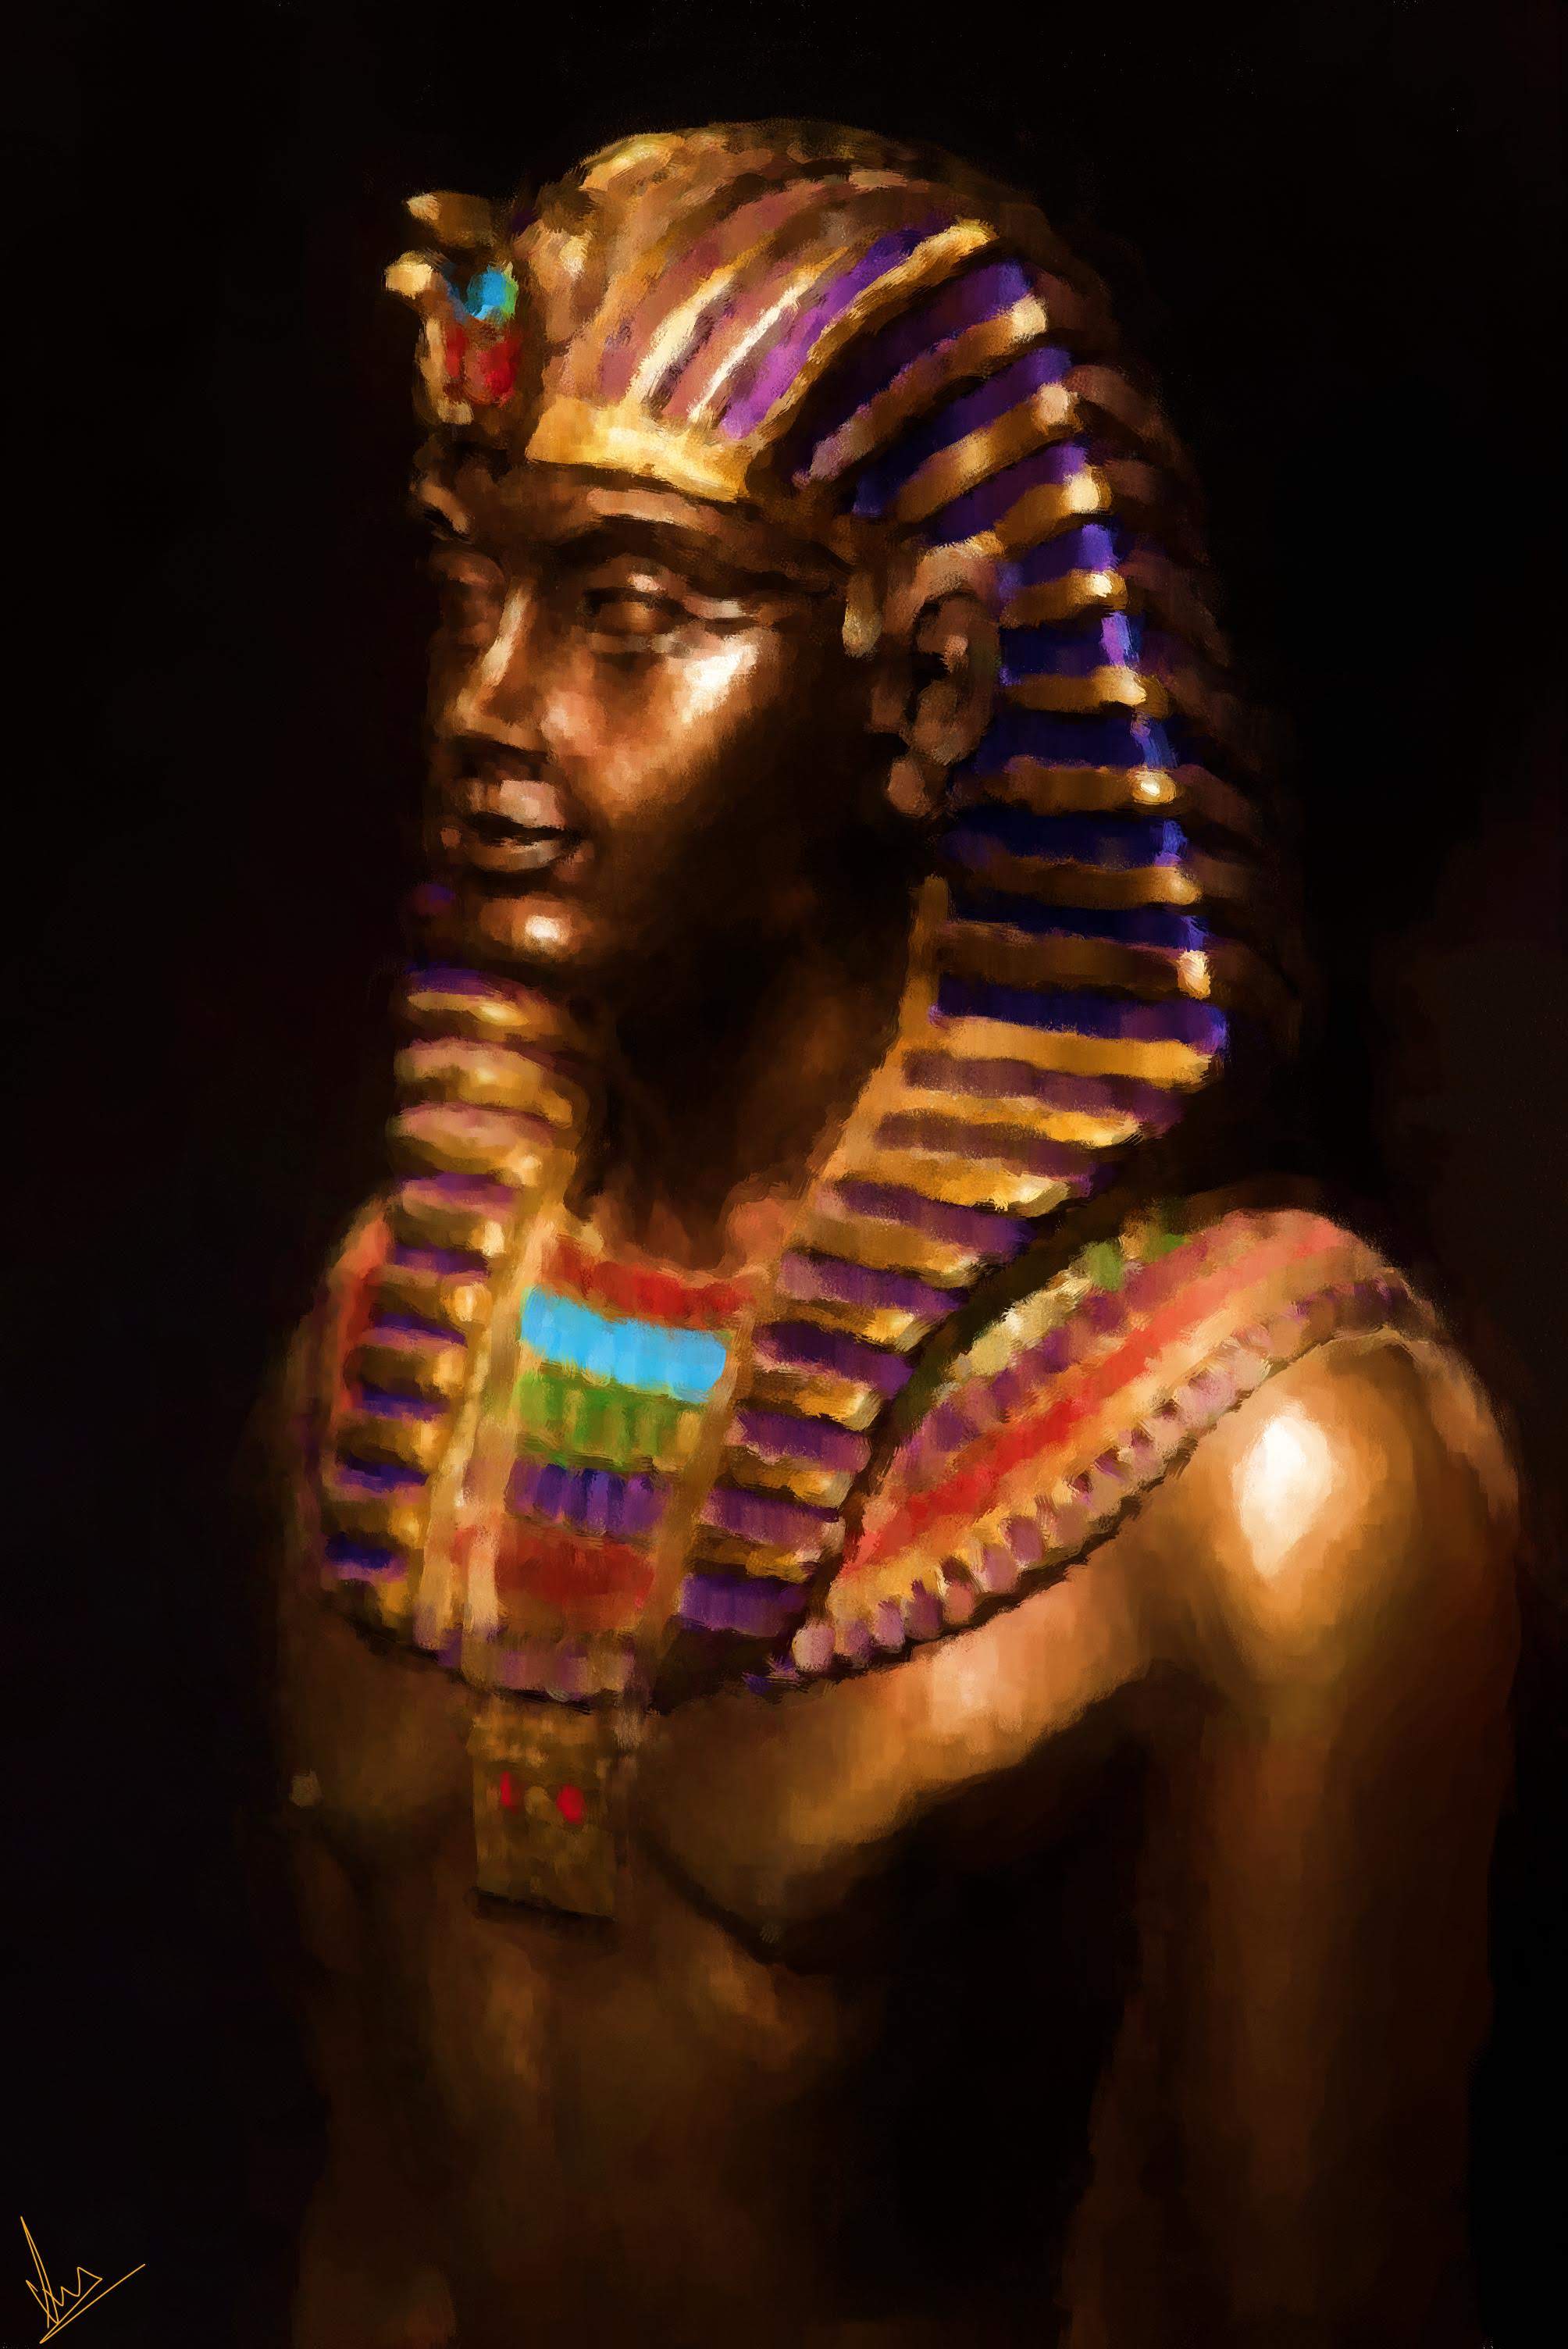 Egyptian Pharaoh - A digital painting by Shaalyn Monteiro